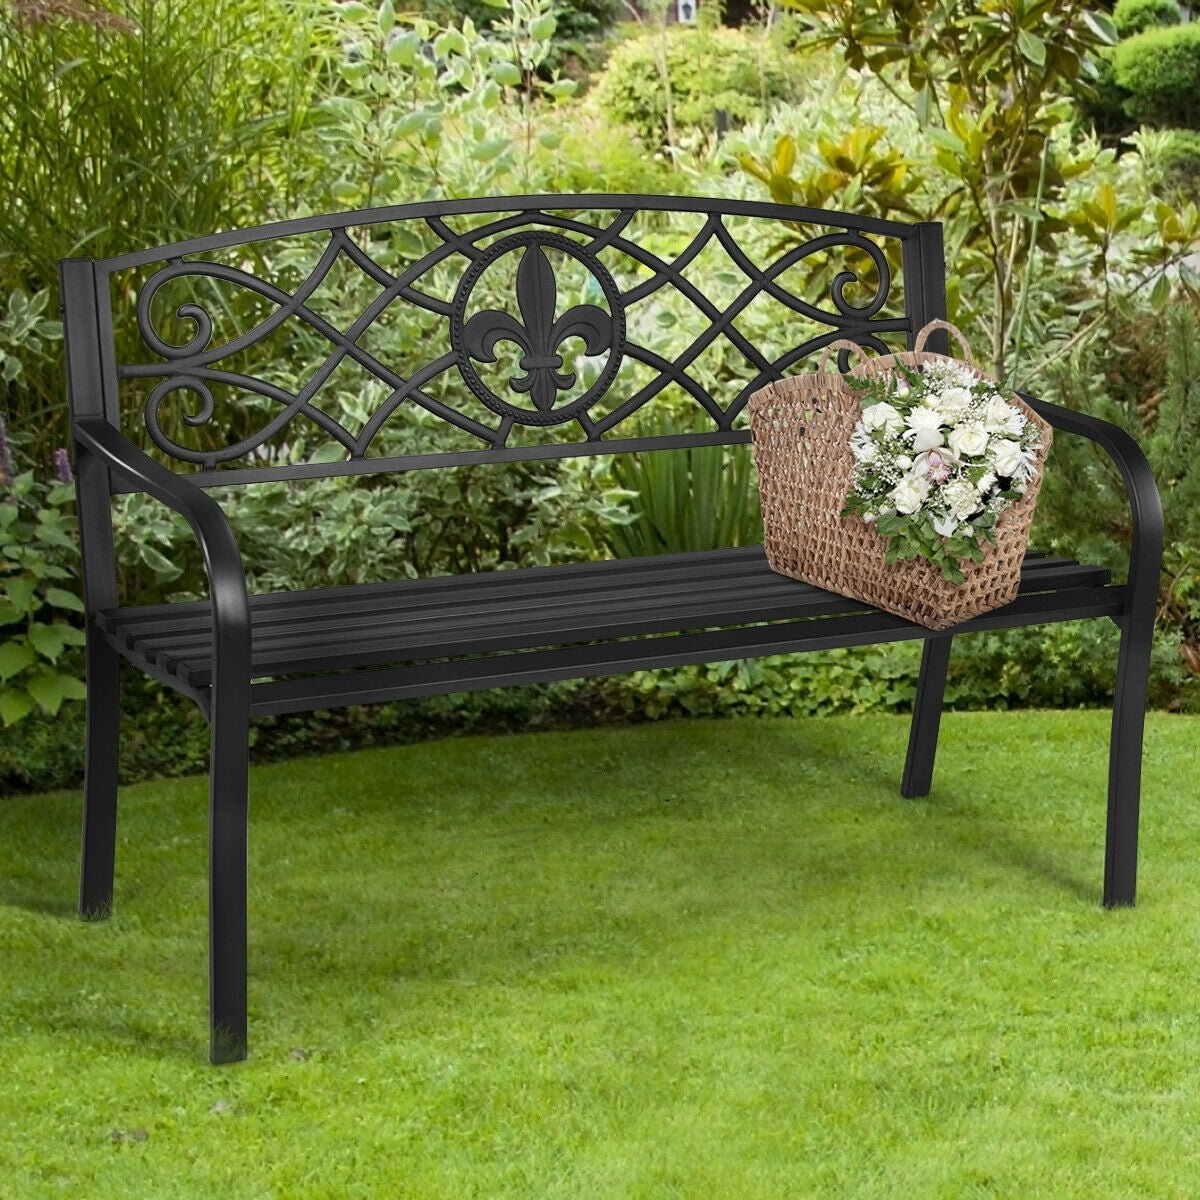 Giantex 50inch Patio Garden Bench,Outdoor Loveseat with Pattern Backrest